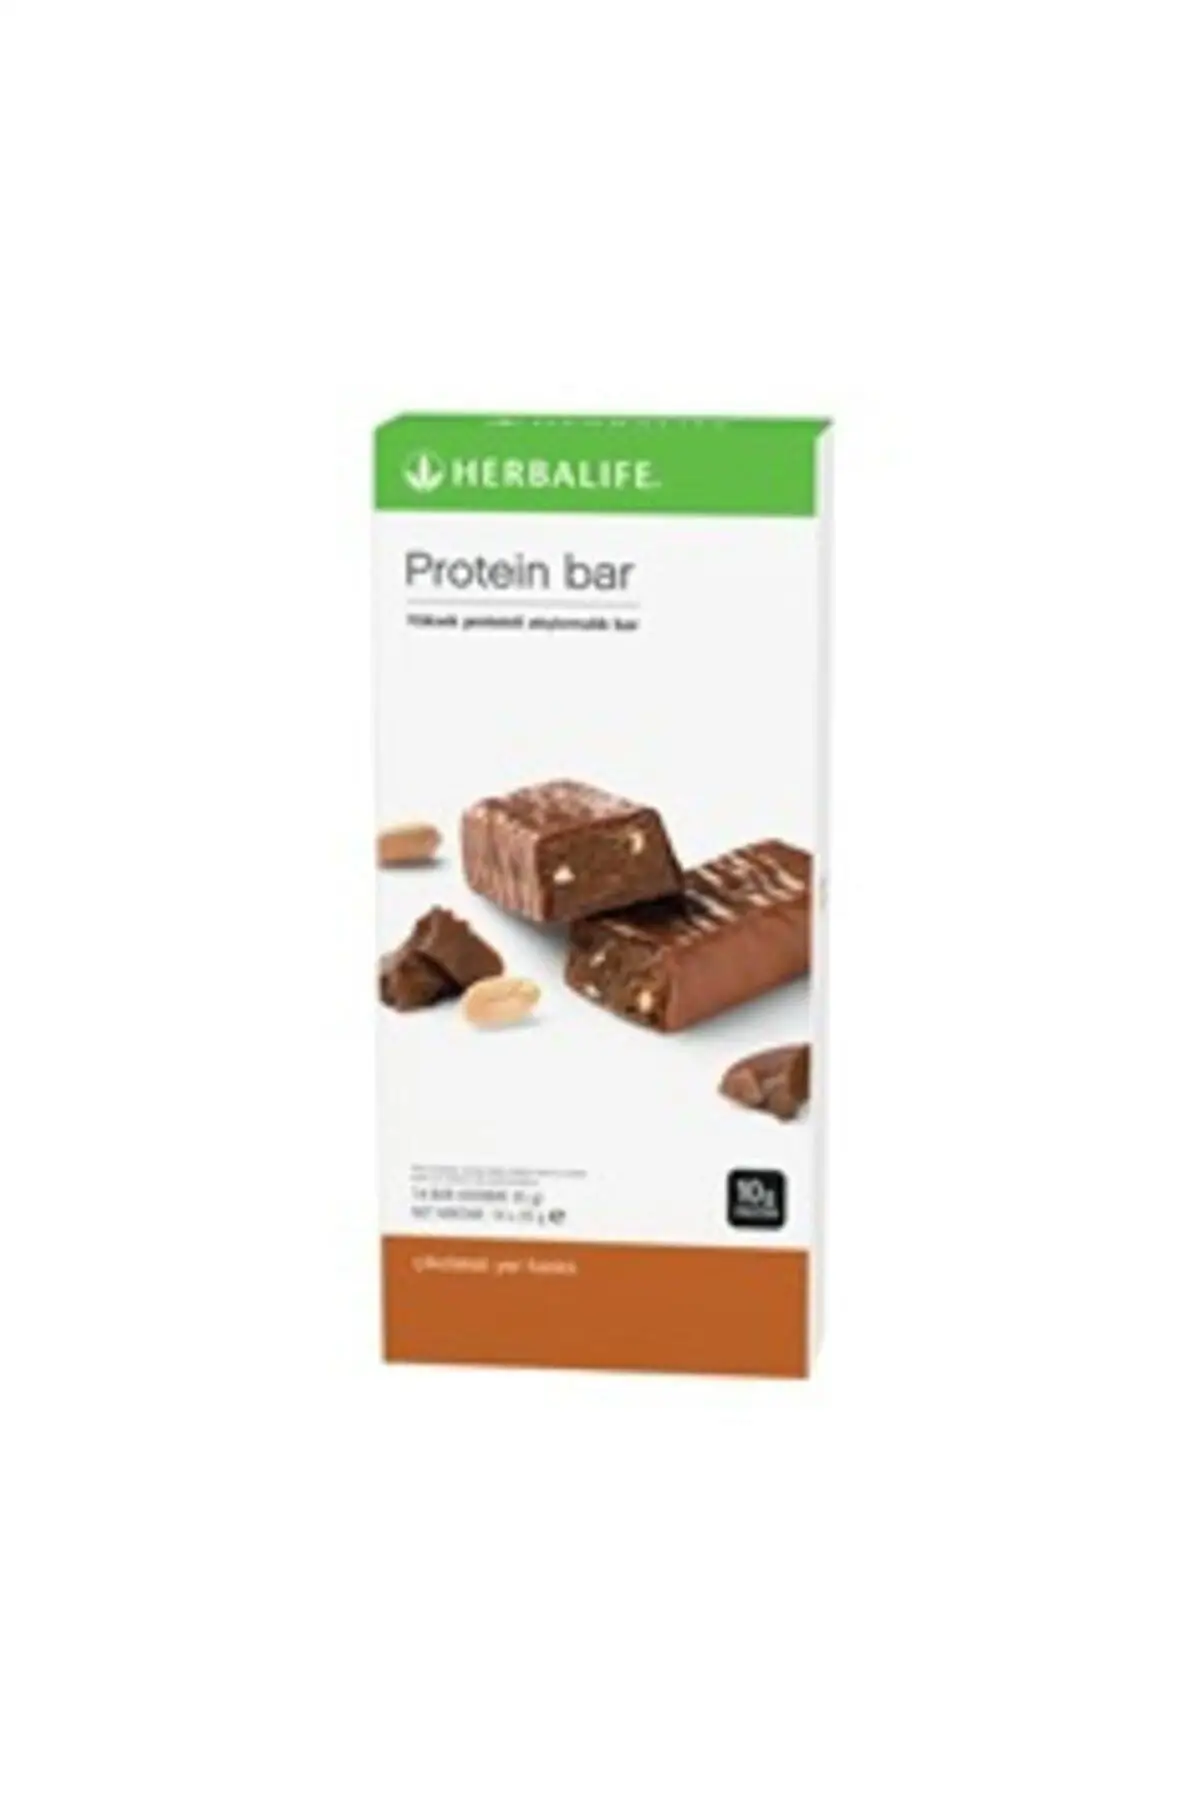 

Protein Bar (Chocolate Peanut In 14 'lü Package Each 35 G